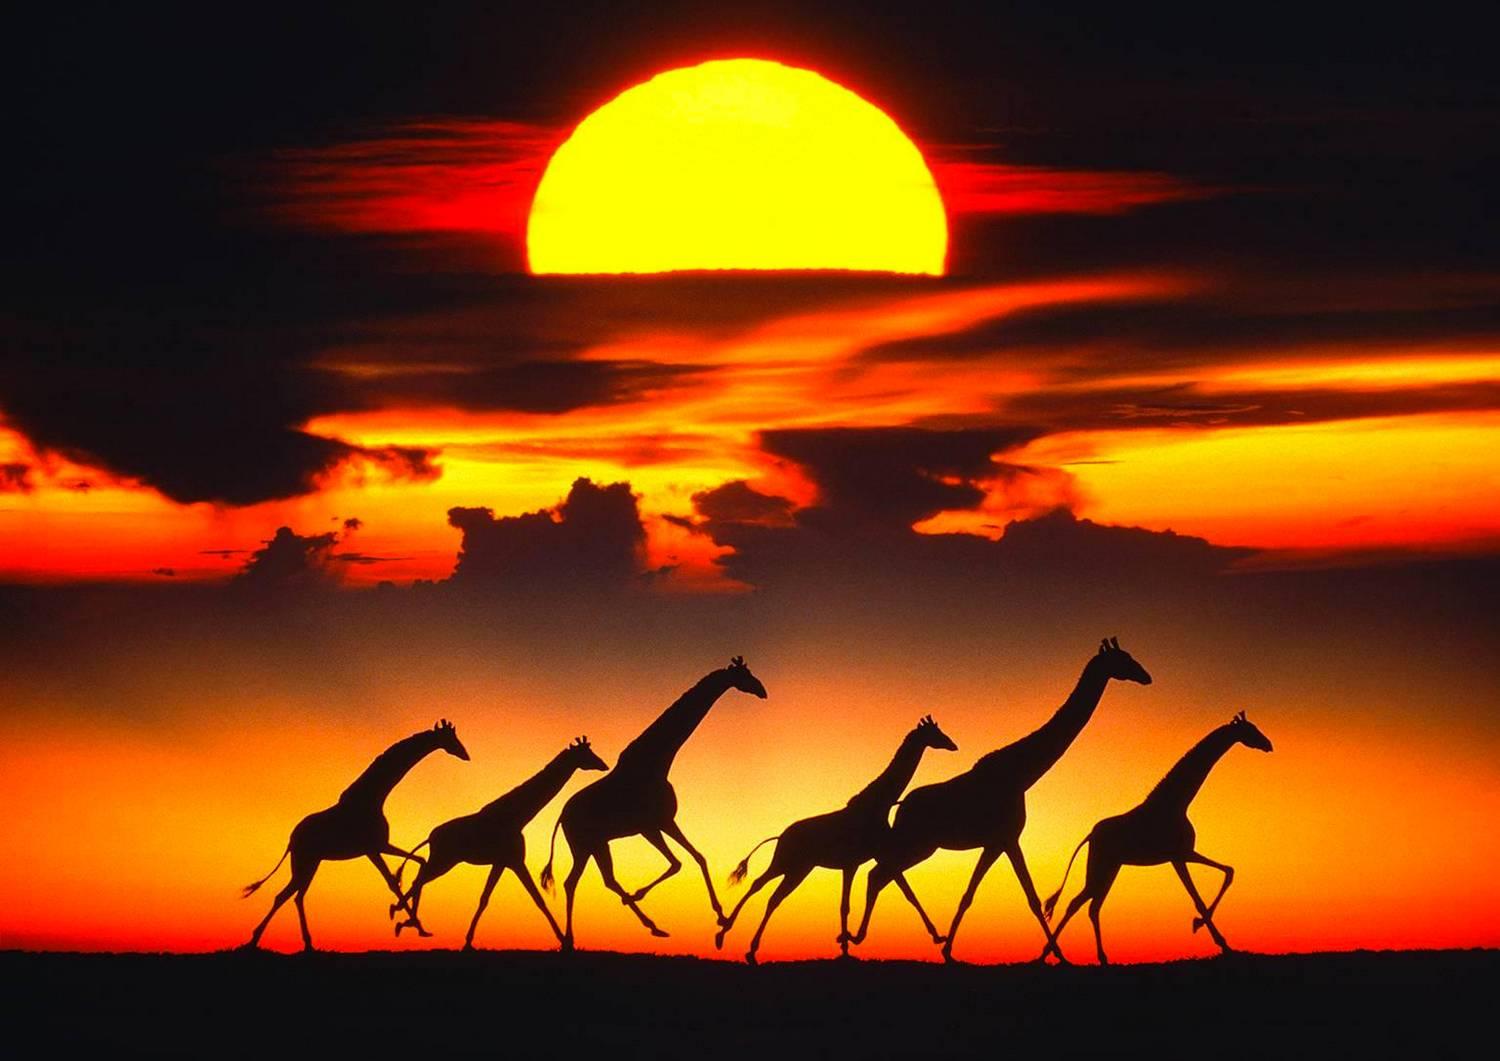 Mitchell Funk Color Photograph - African savanna, Giraffes at Sunset 